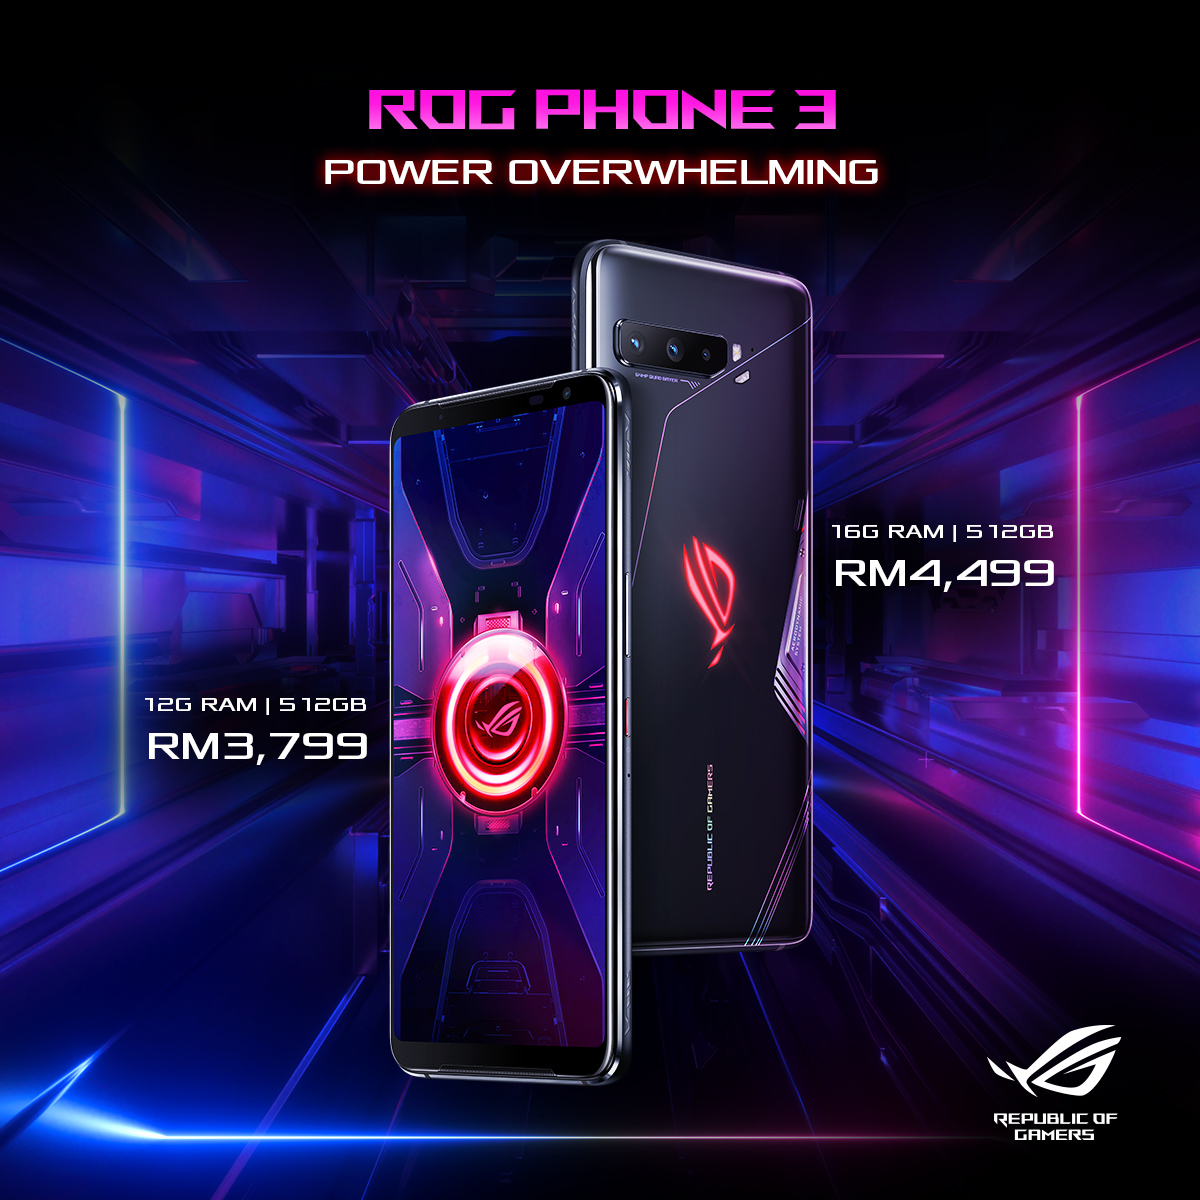 Rog Phone 3 price Malaysia